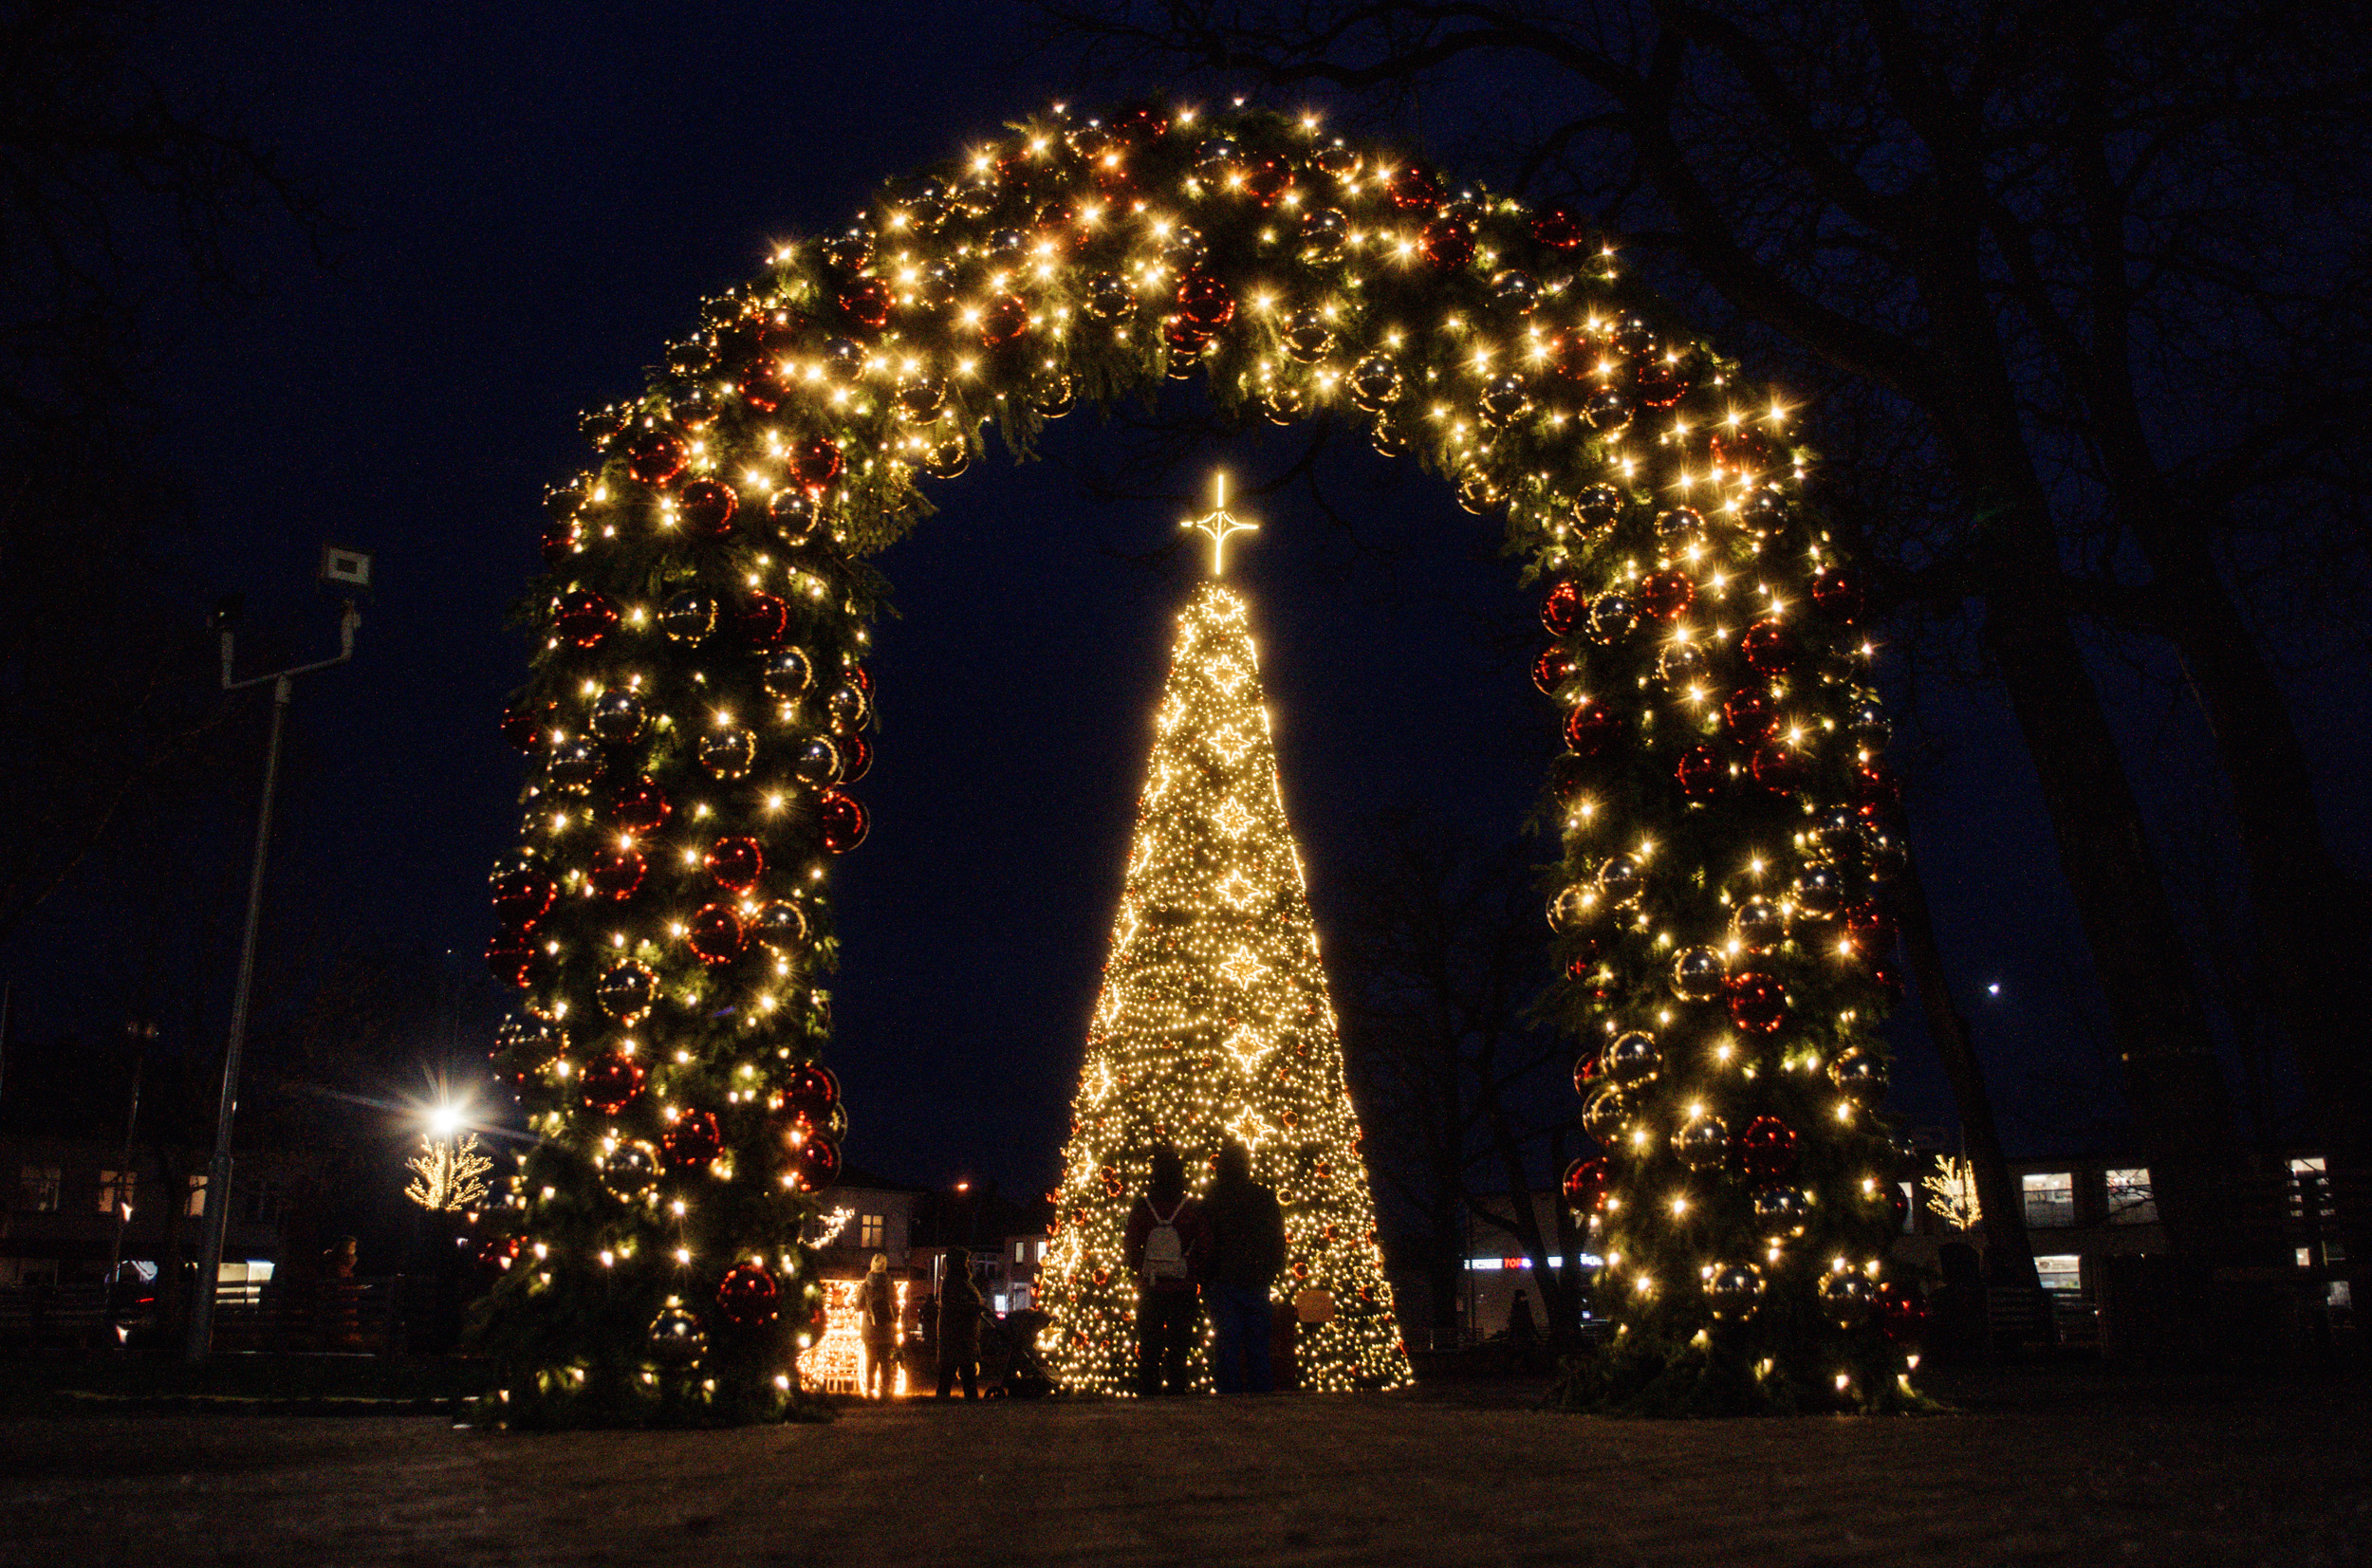 The main Christmas tree of Kretinga town was lit